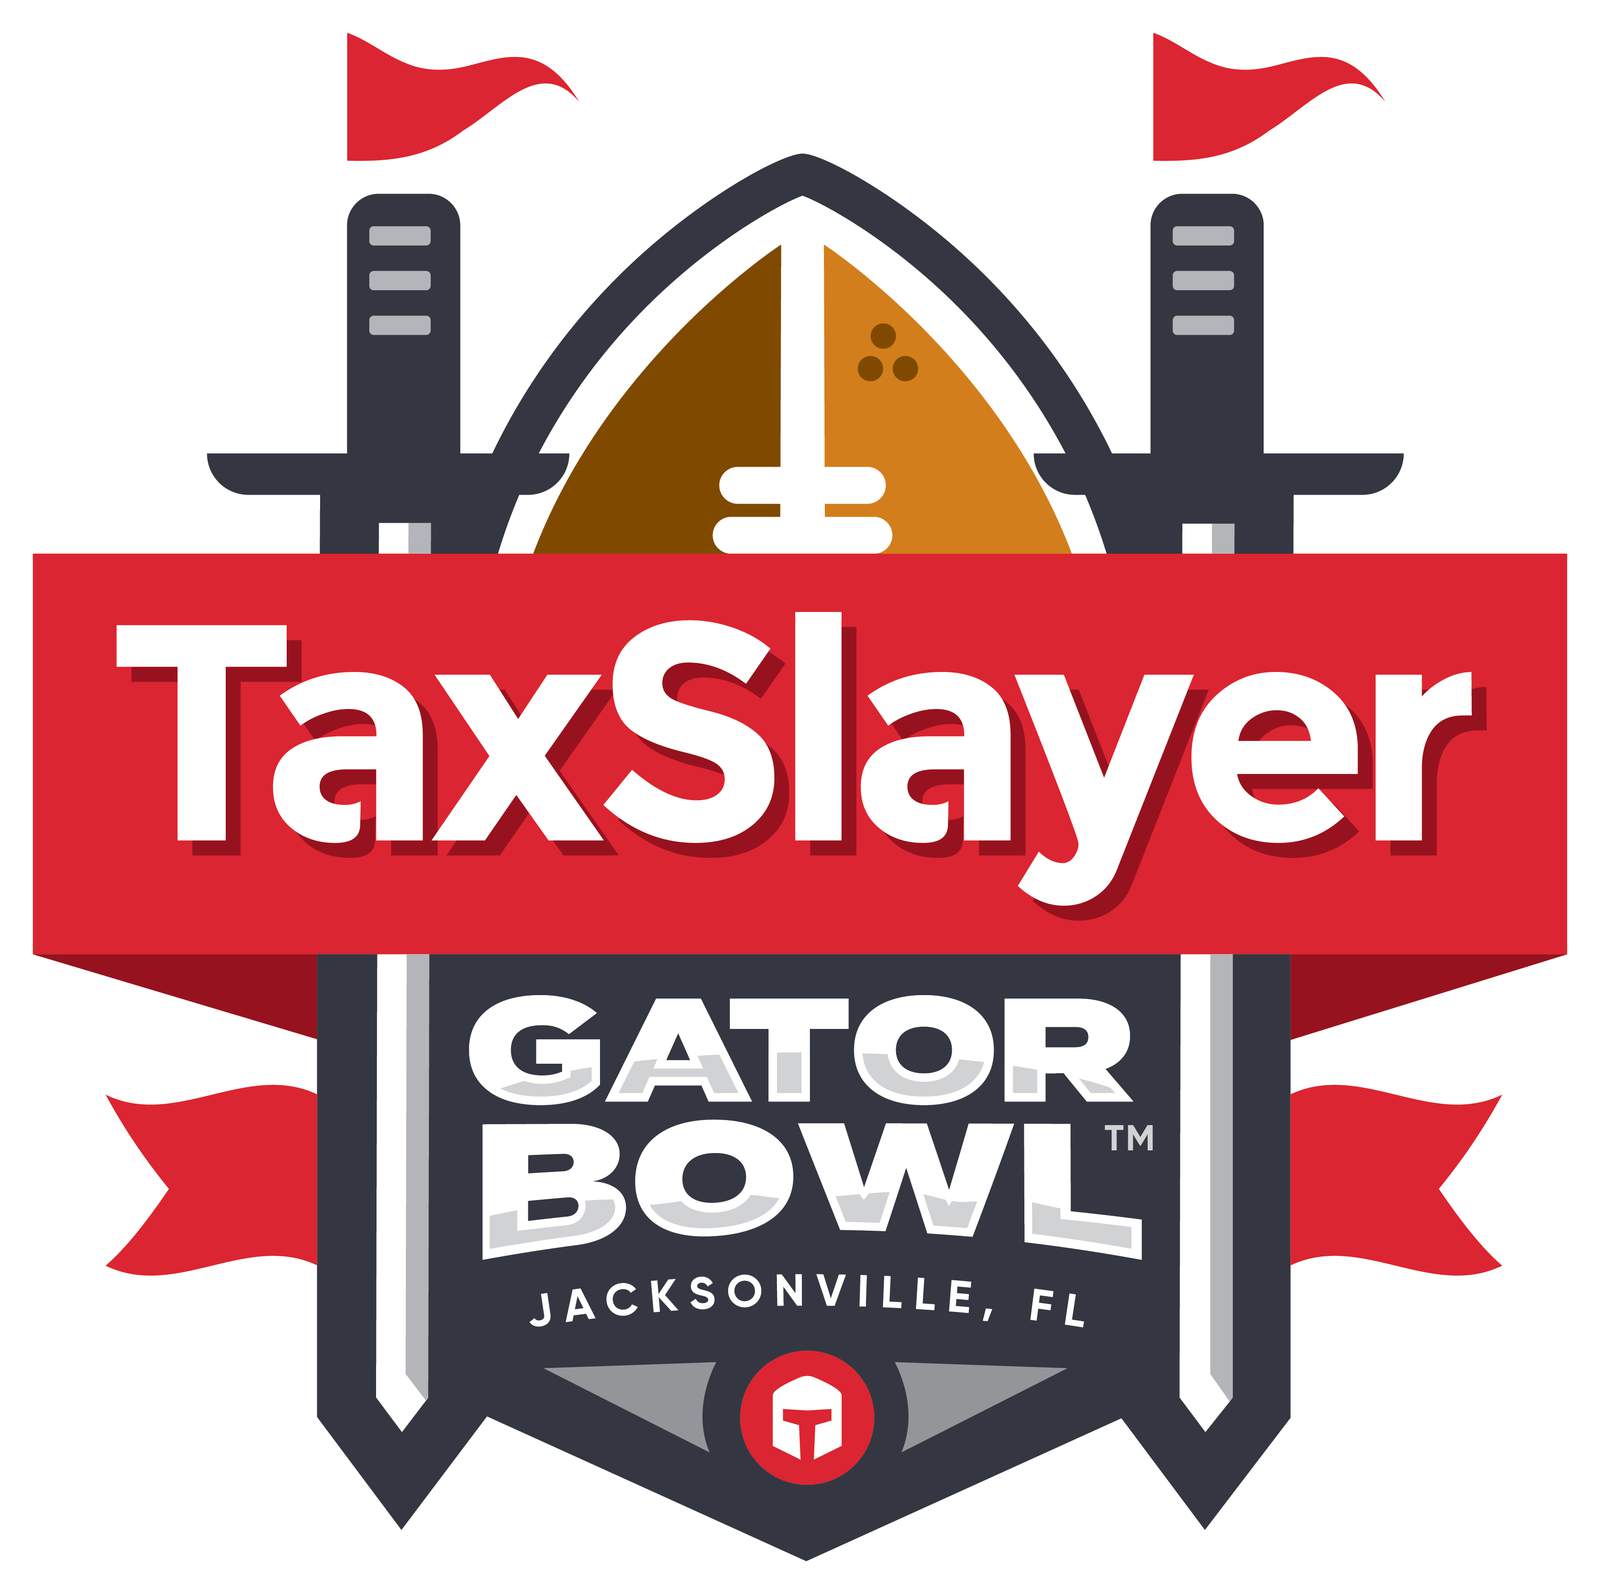 TaxSlayer Gator Bowl Ticket Giveaway